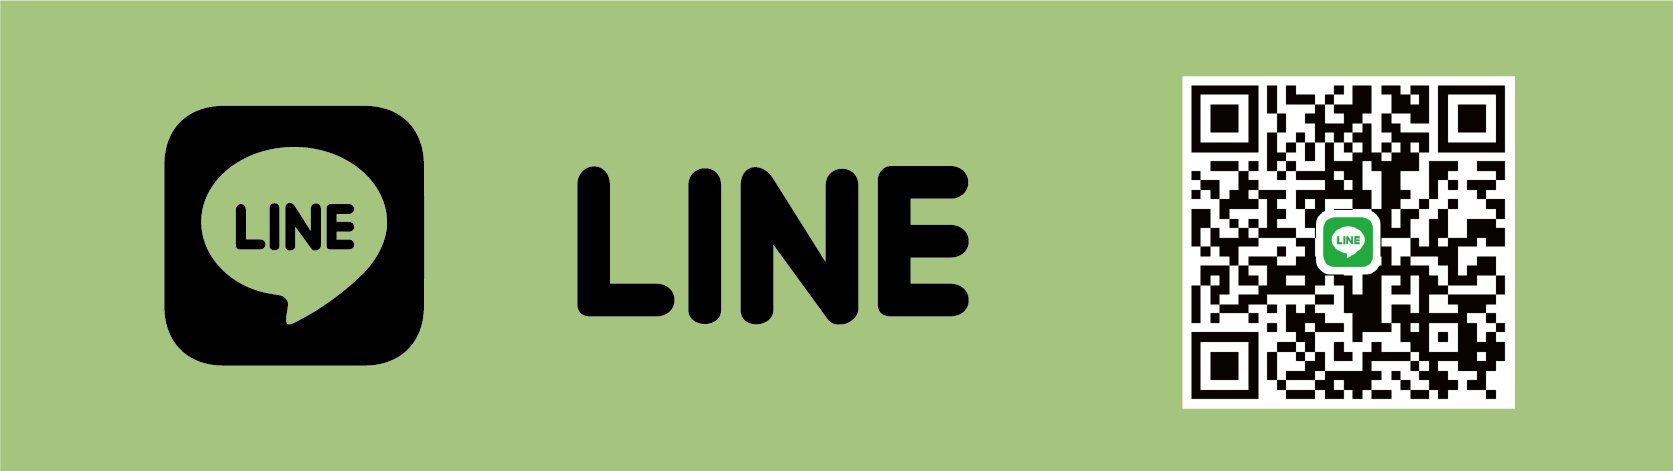 Lalino-line.png